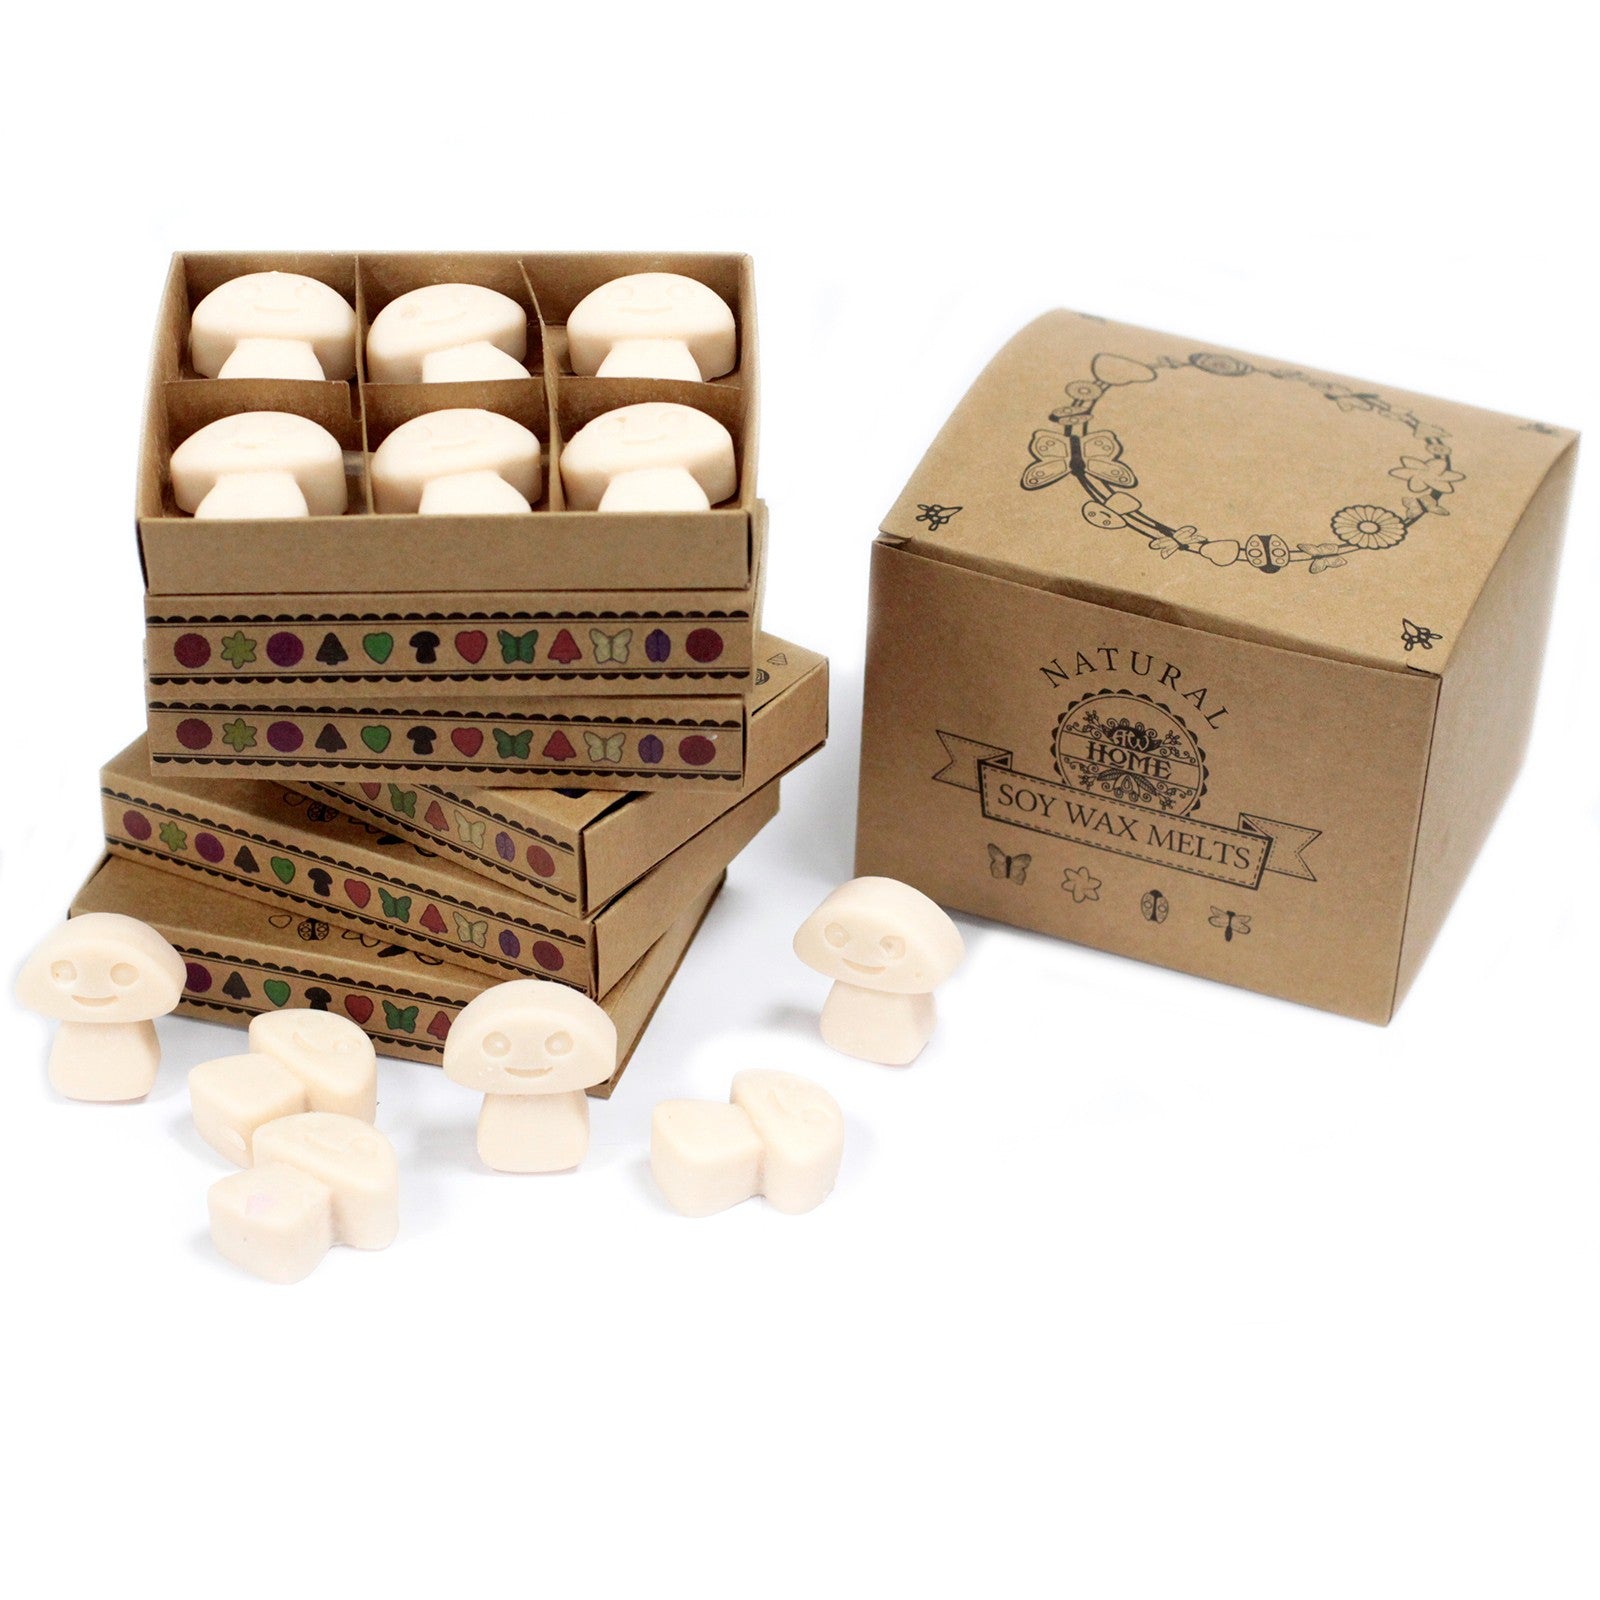 View Box of 6 Wax Melts Vanilla Nutmeg information